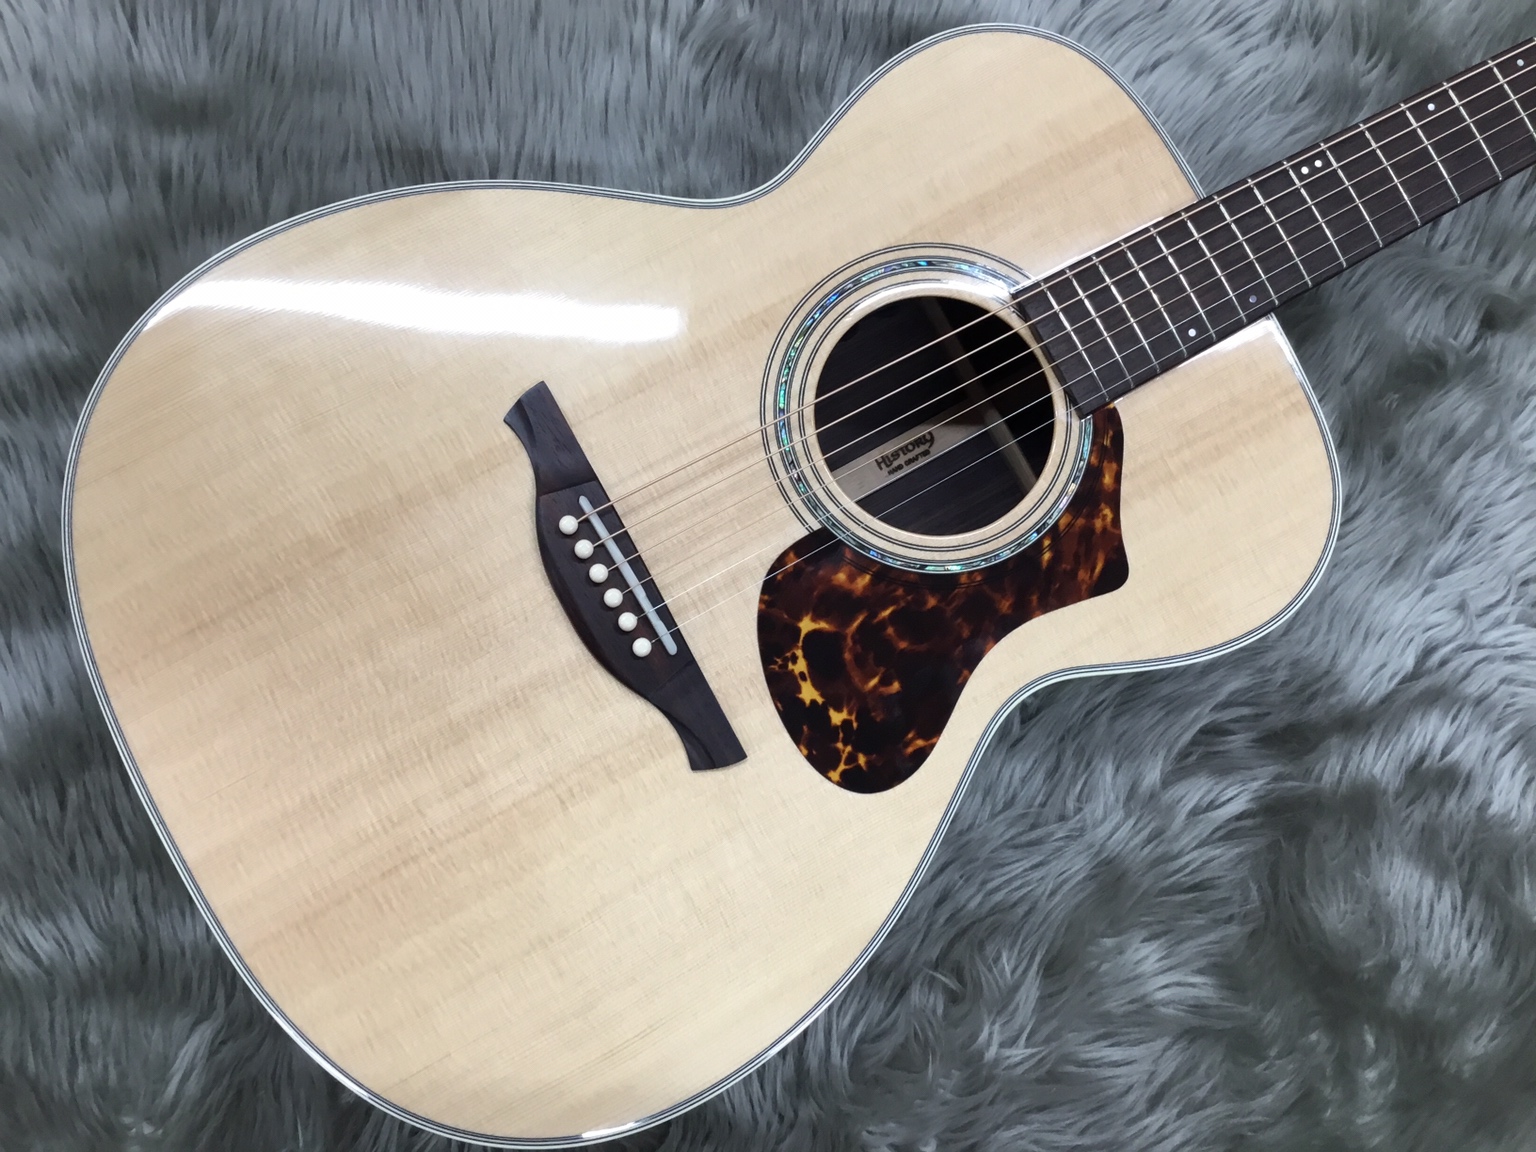 *Sシリーズ　2020年モデル 島村楽器オリジナルブランドHISTORY（ヒストリー）から、小ぶりで薄めのスモールボディの、エレクトリック・アコースティックギター2020年モデル『NT-S3/2020』です。ナチュラル・グロス仕上げのシトカ・スプルース単板材トップとインディアン・ローズウッド単板材バ […]